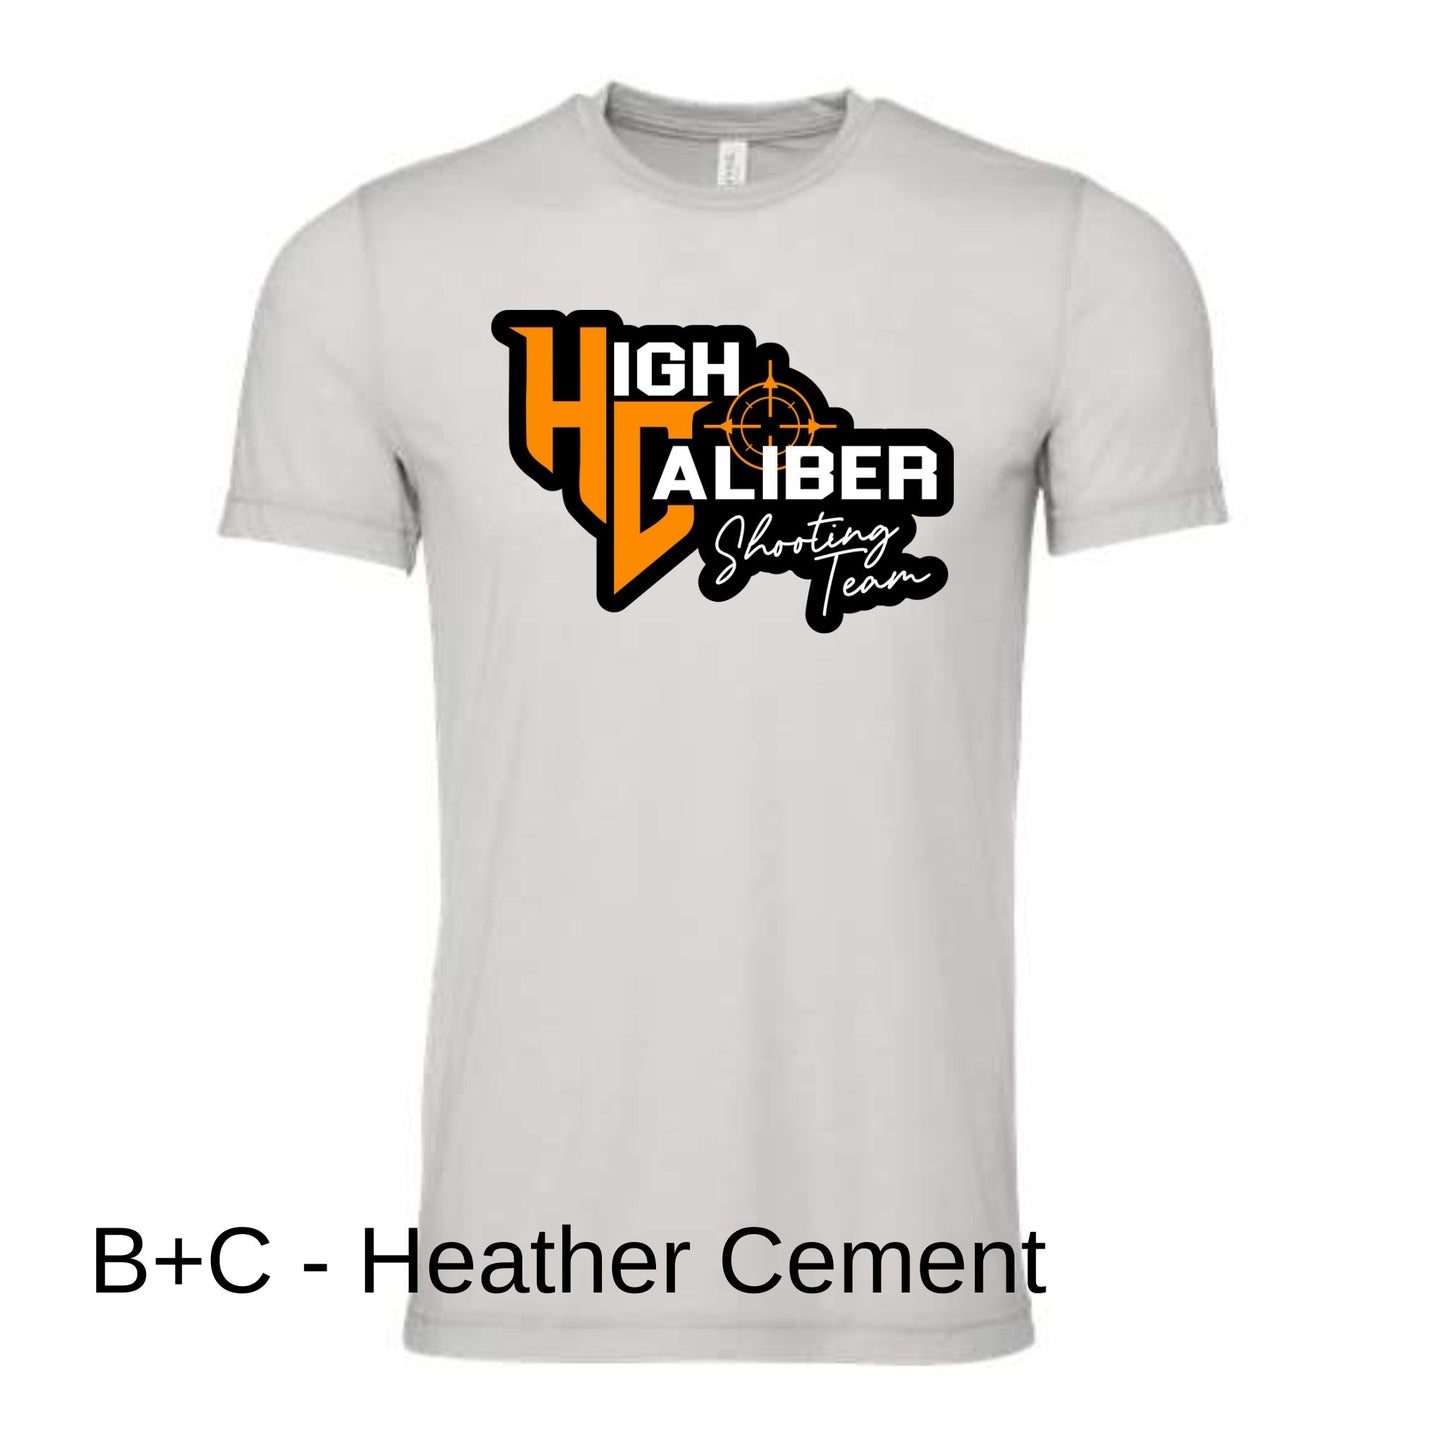 High Caliber Heather Cement